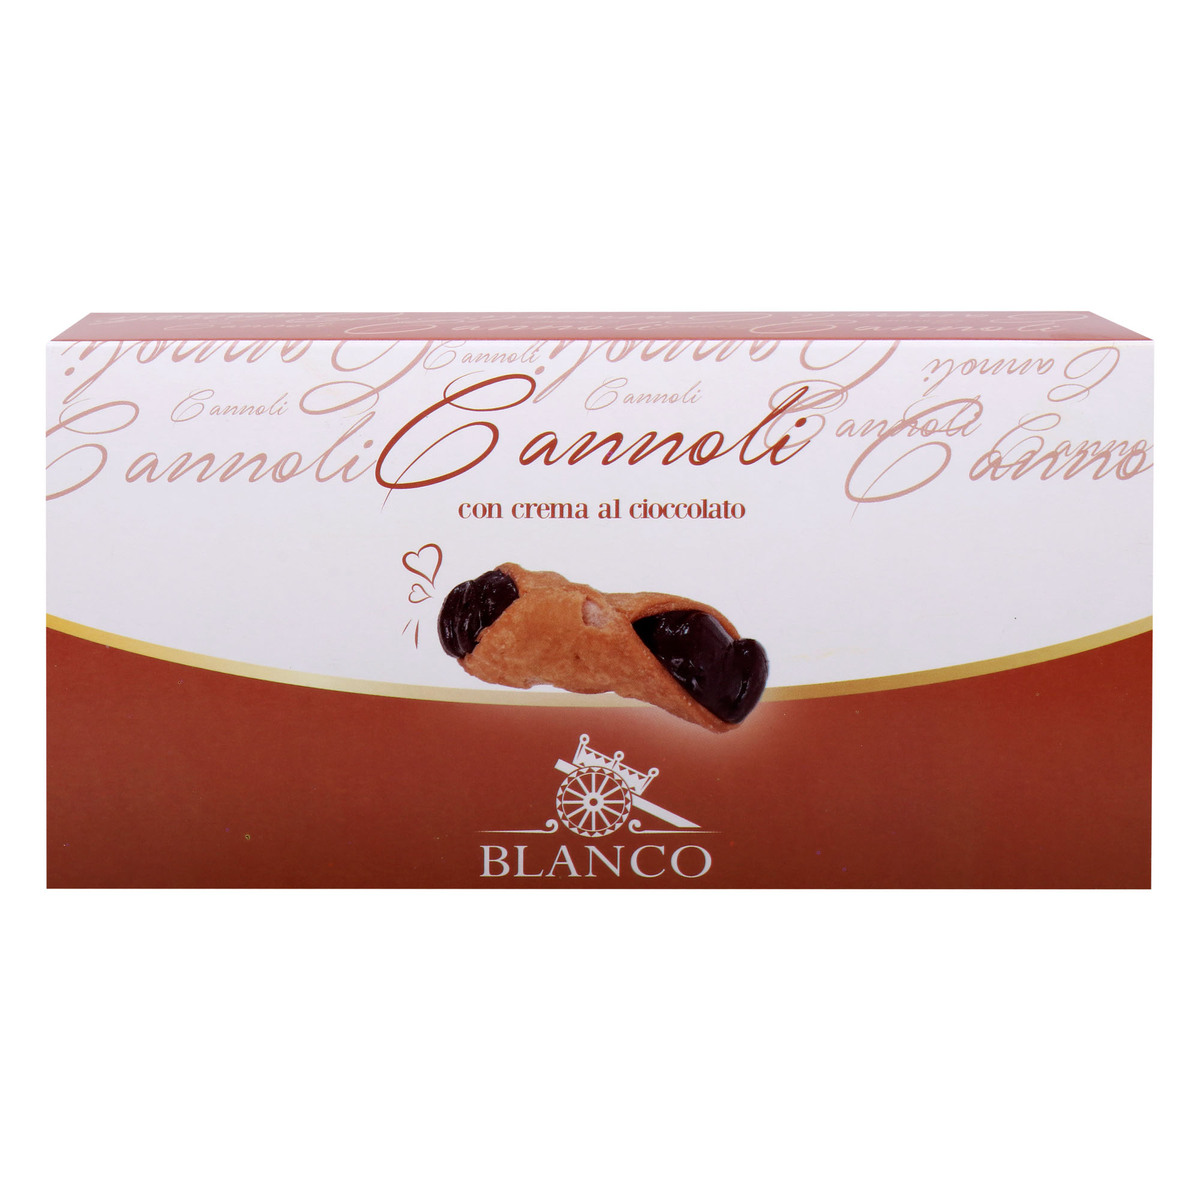 Blanco Cannoli Sweet Chocolate, 180 g